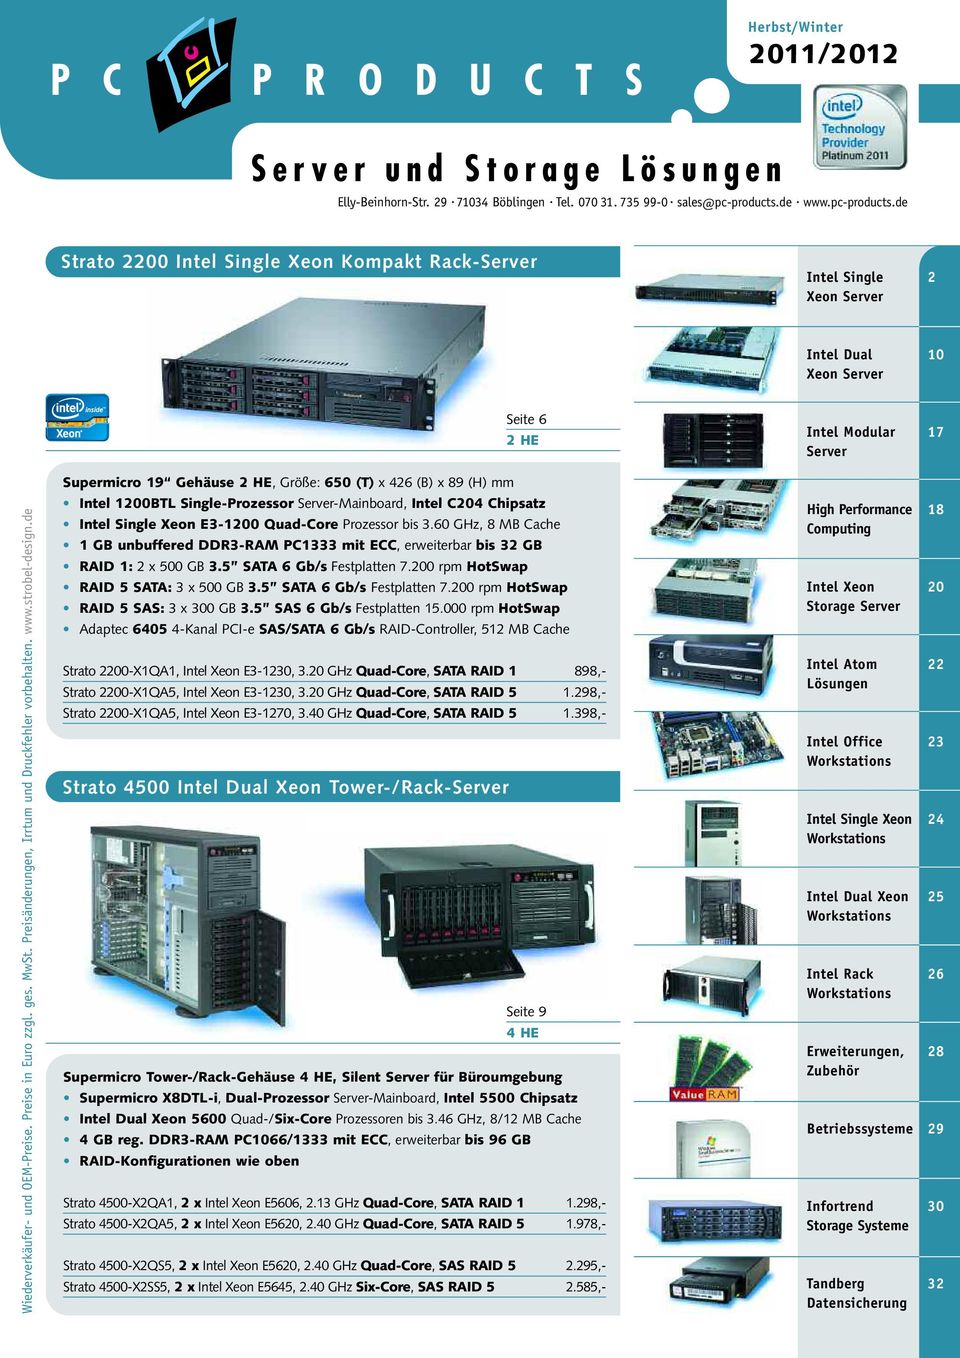 de Strato 2200 Intel Single Xeon Kompakt Rack-Server Intel Single Xeon Server 2 Intel Dual Xeon Server 10 Seite 6 Intel Modular Server 17 Supermicro 19 Gehäuse, Größe: 650 (T) x 426 (B) x 89 (H) mm